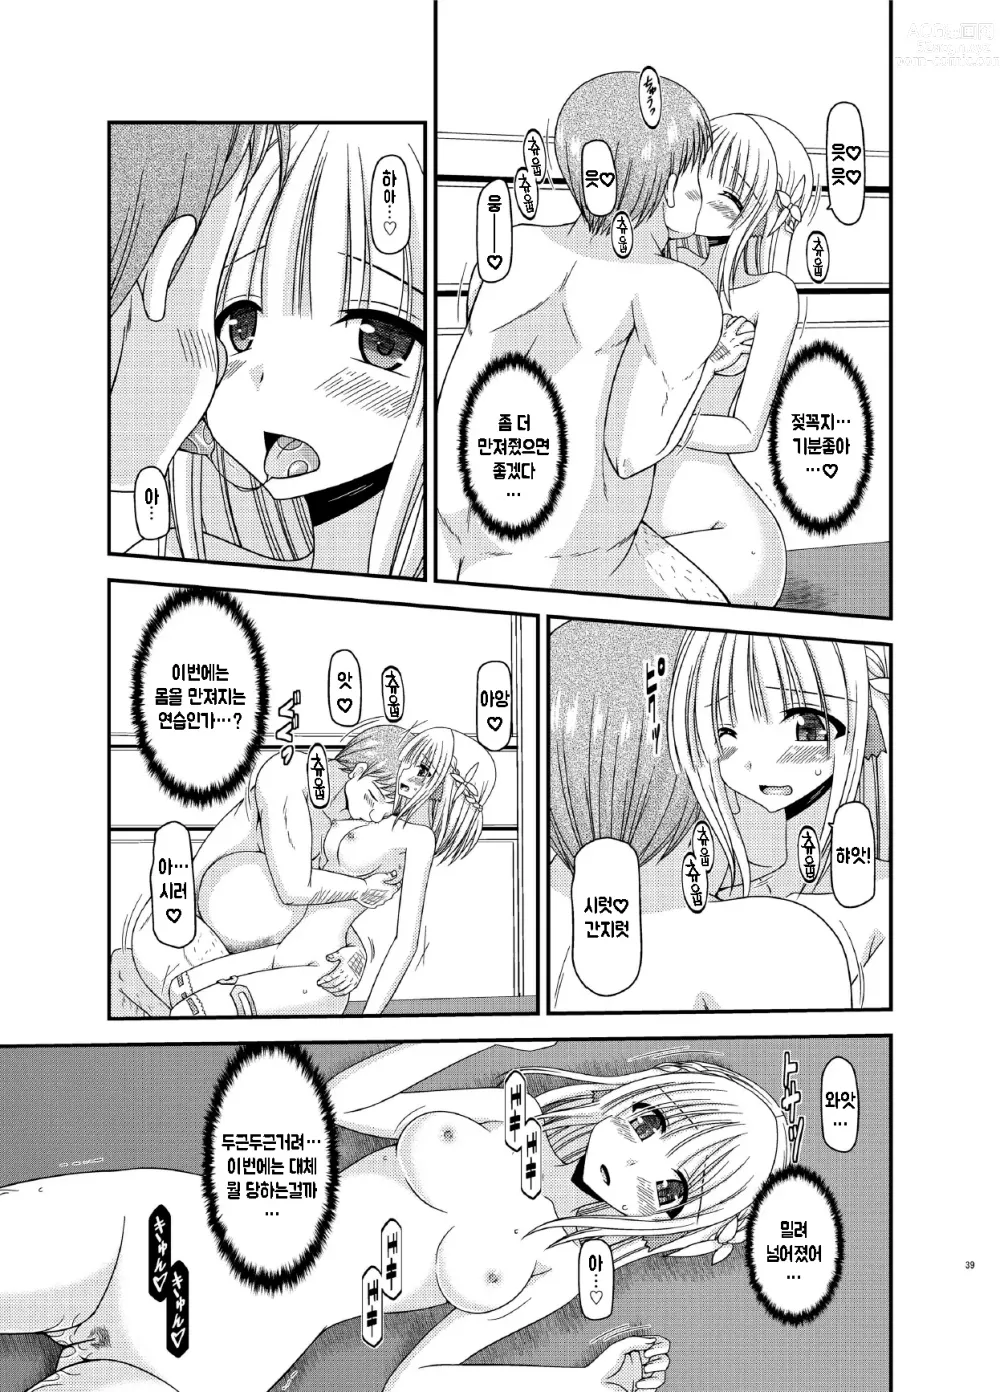 Page 38 of doujinshi Iseijin to no Sex wa No Count dakara...